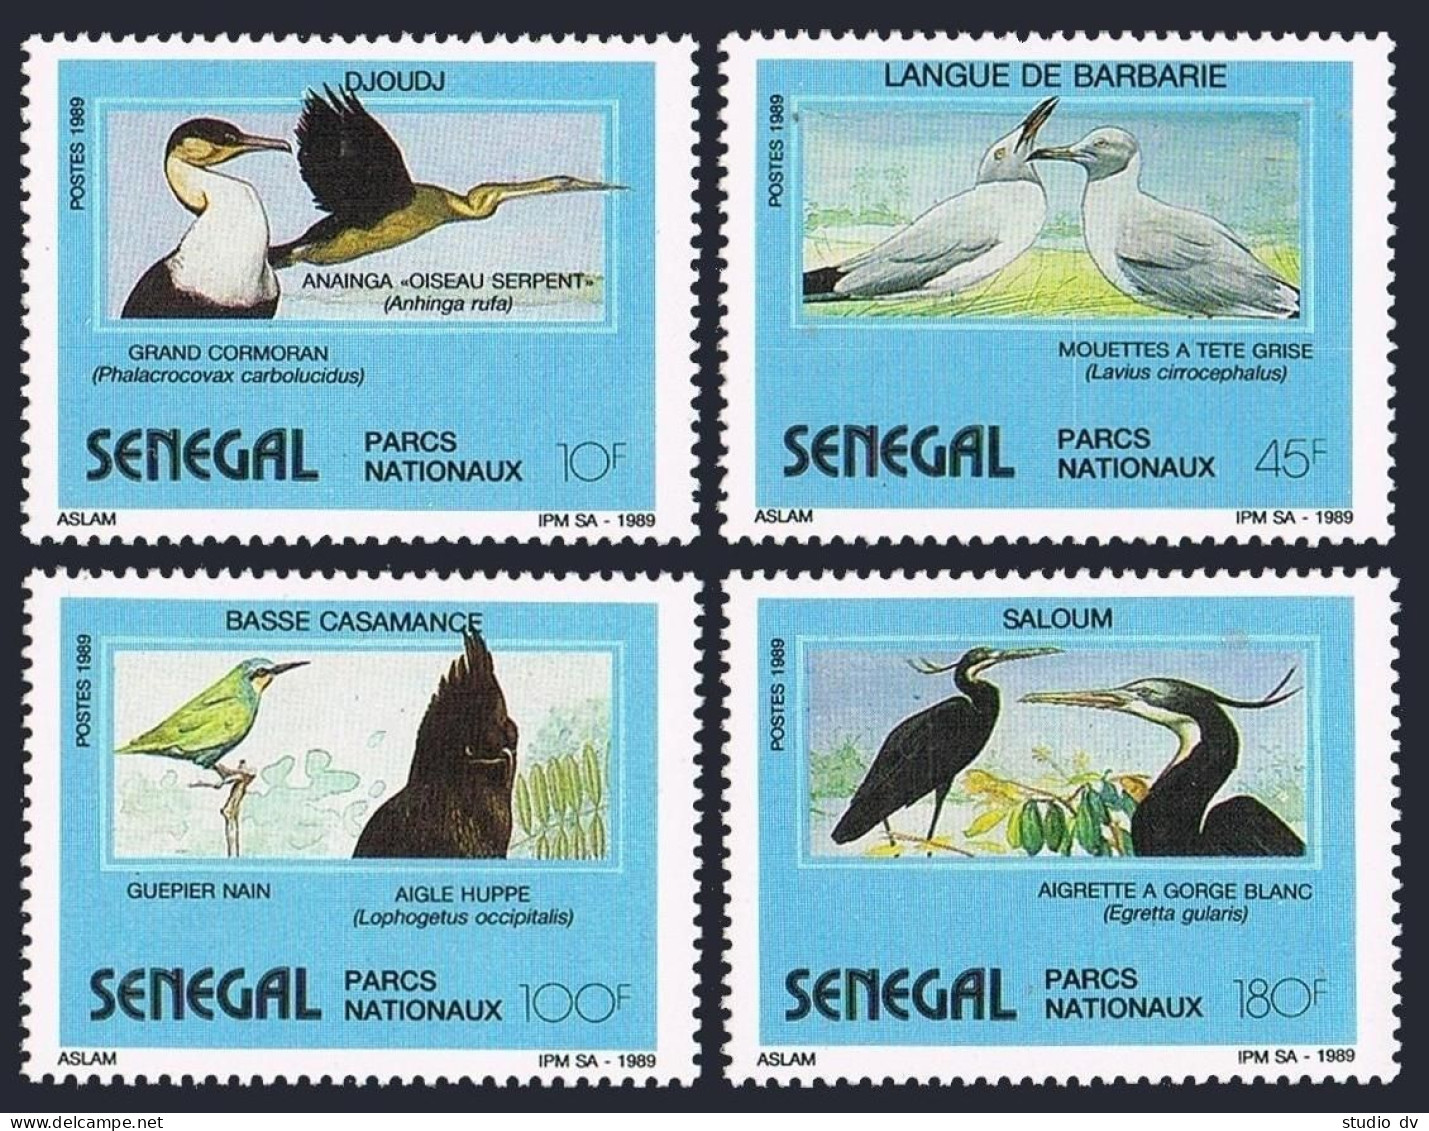 Senegal 849-852, MNH. Michel 1051-1054. National Parks & Birds, 1989. - Senegal (1960-...)